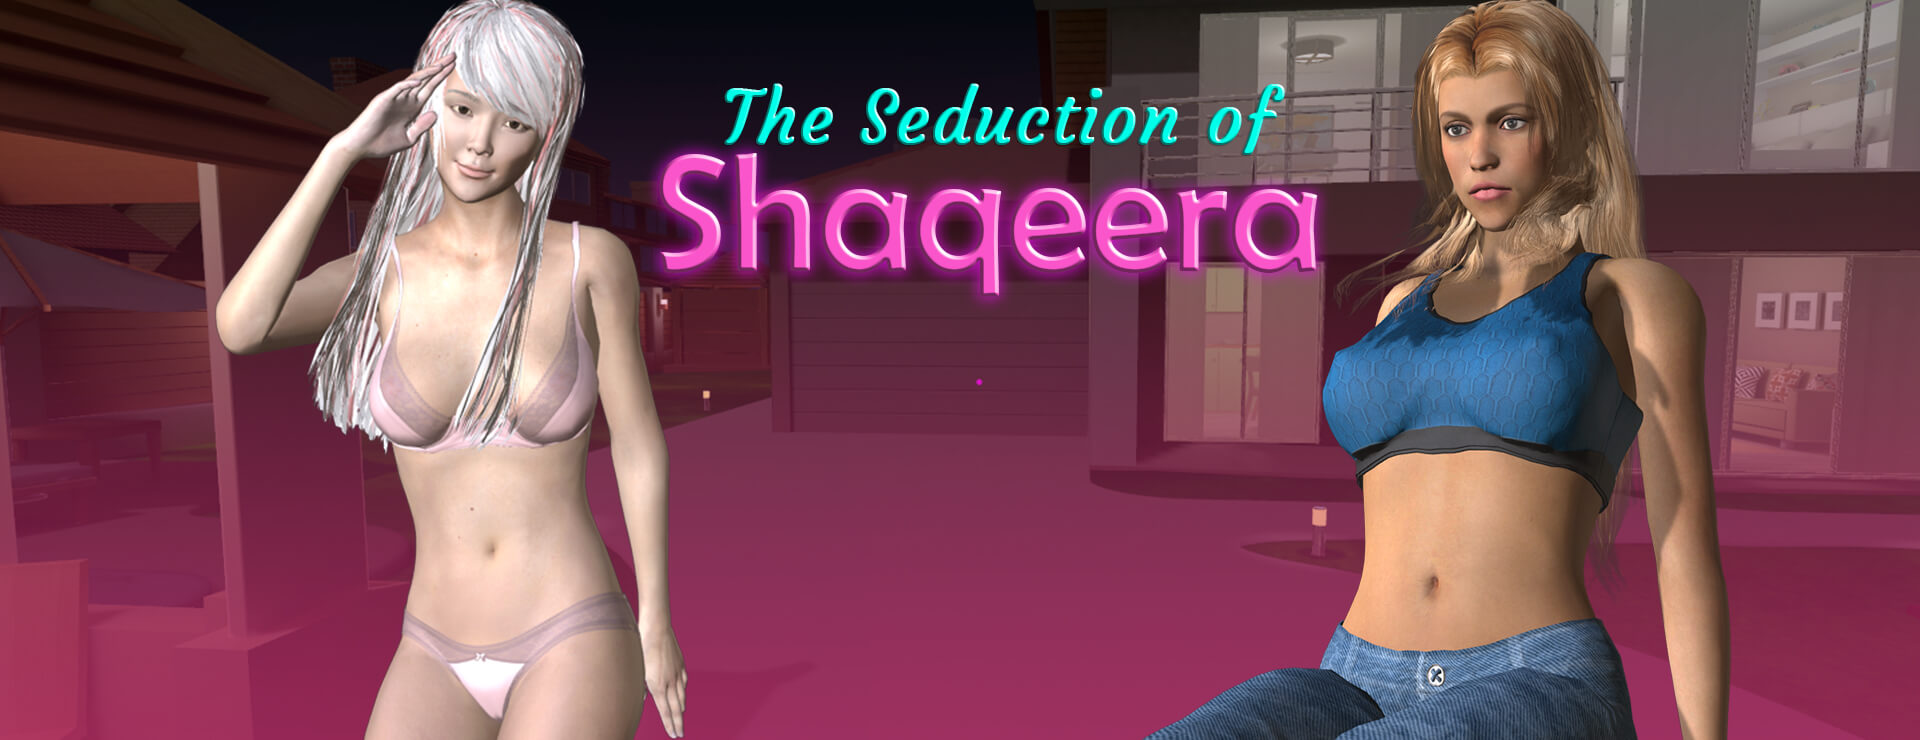 The Seduction Of Shaqeera - Action Aventure Jeu